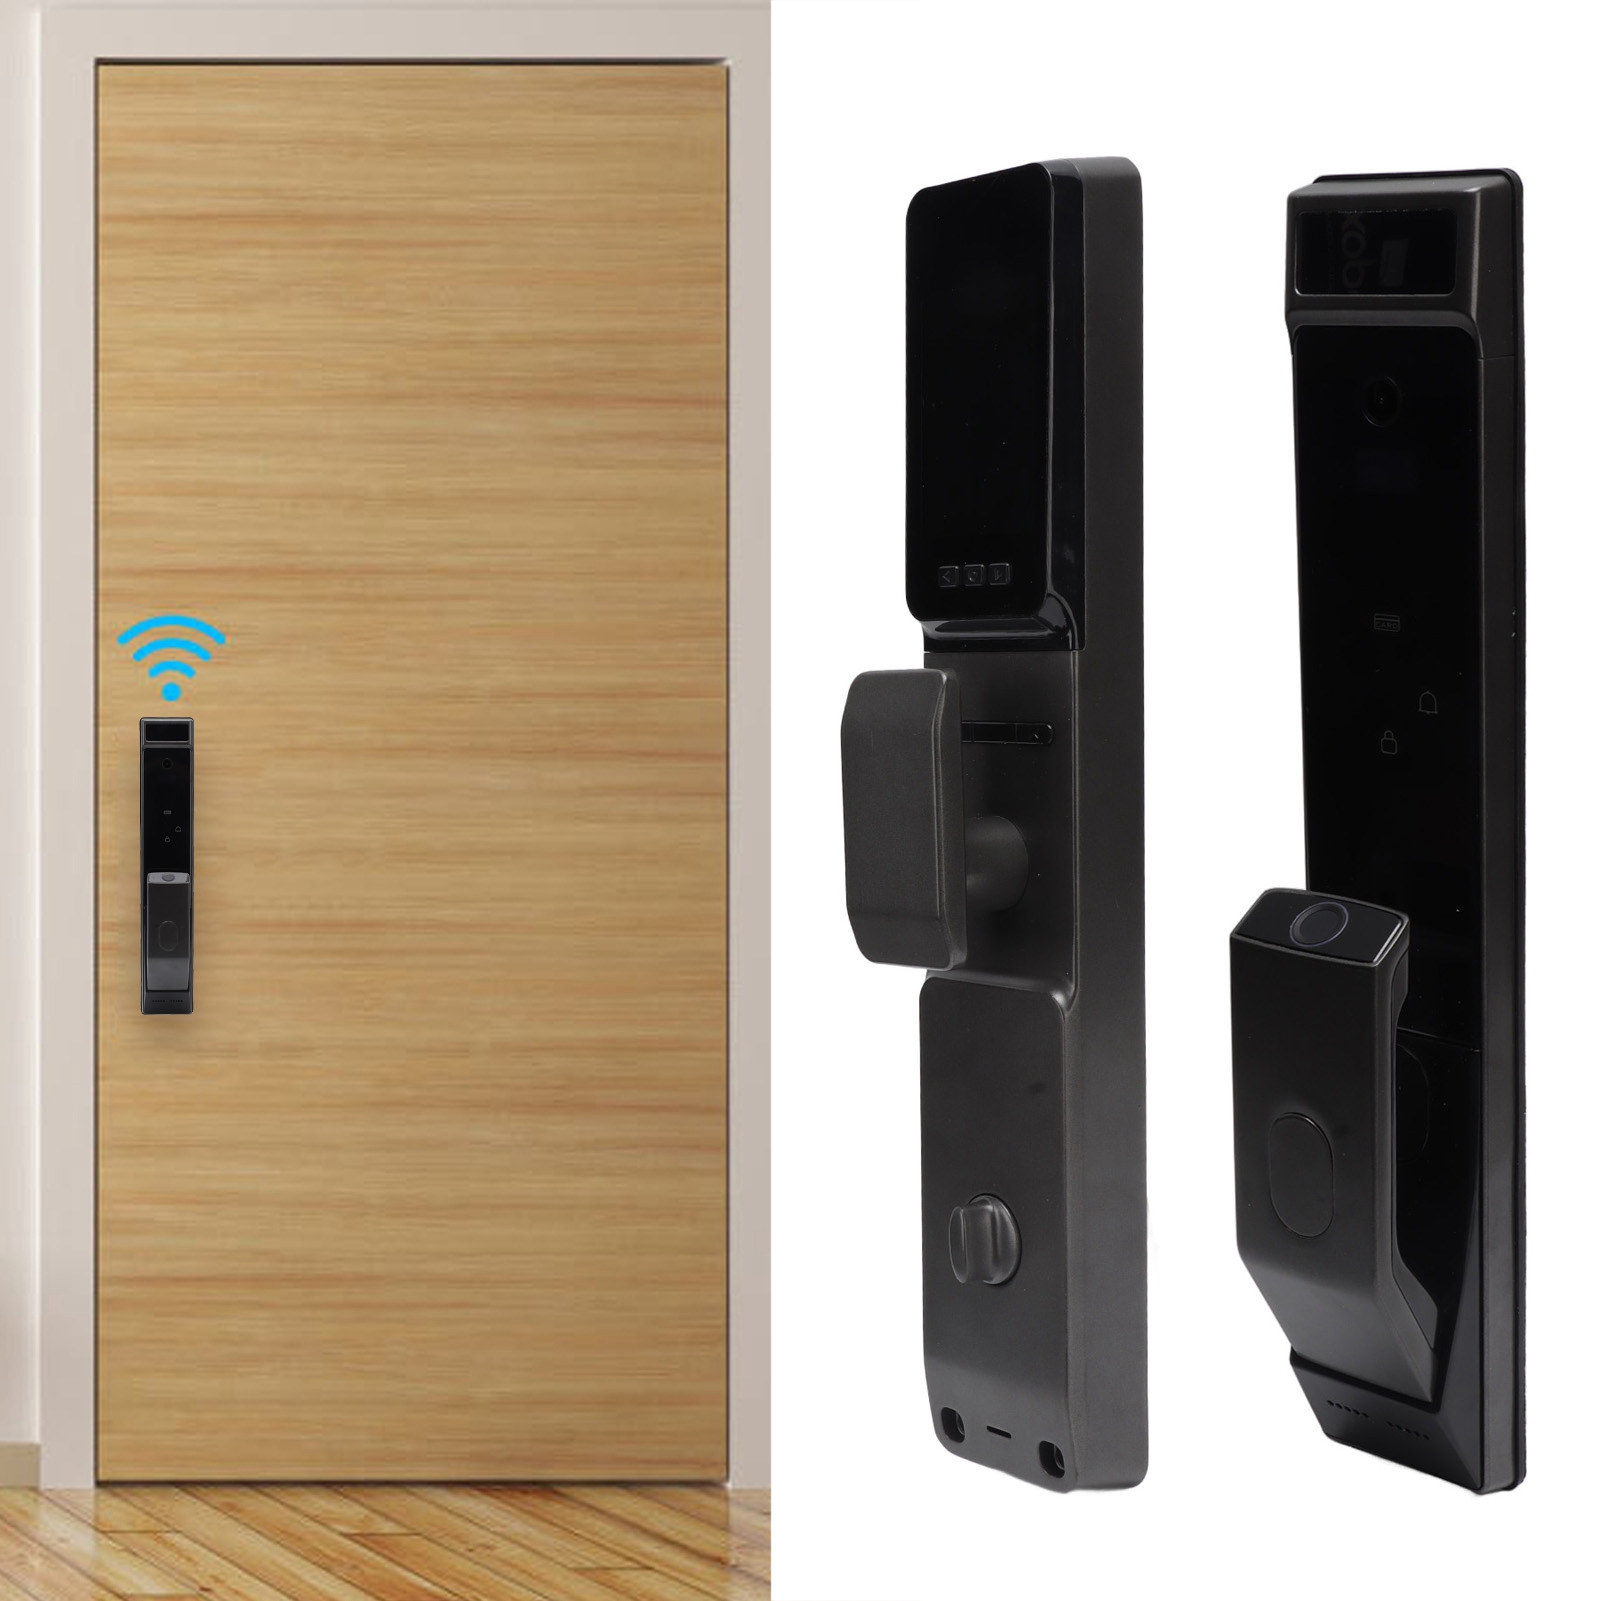 Diydeg WiFi Smart Deadbolt, in Fingerprint Keyless Entry Door Locks with 3D Face Recognition, Biometric Lock Keypad, Digital Electronic Auto for H - 2